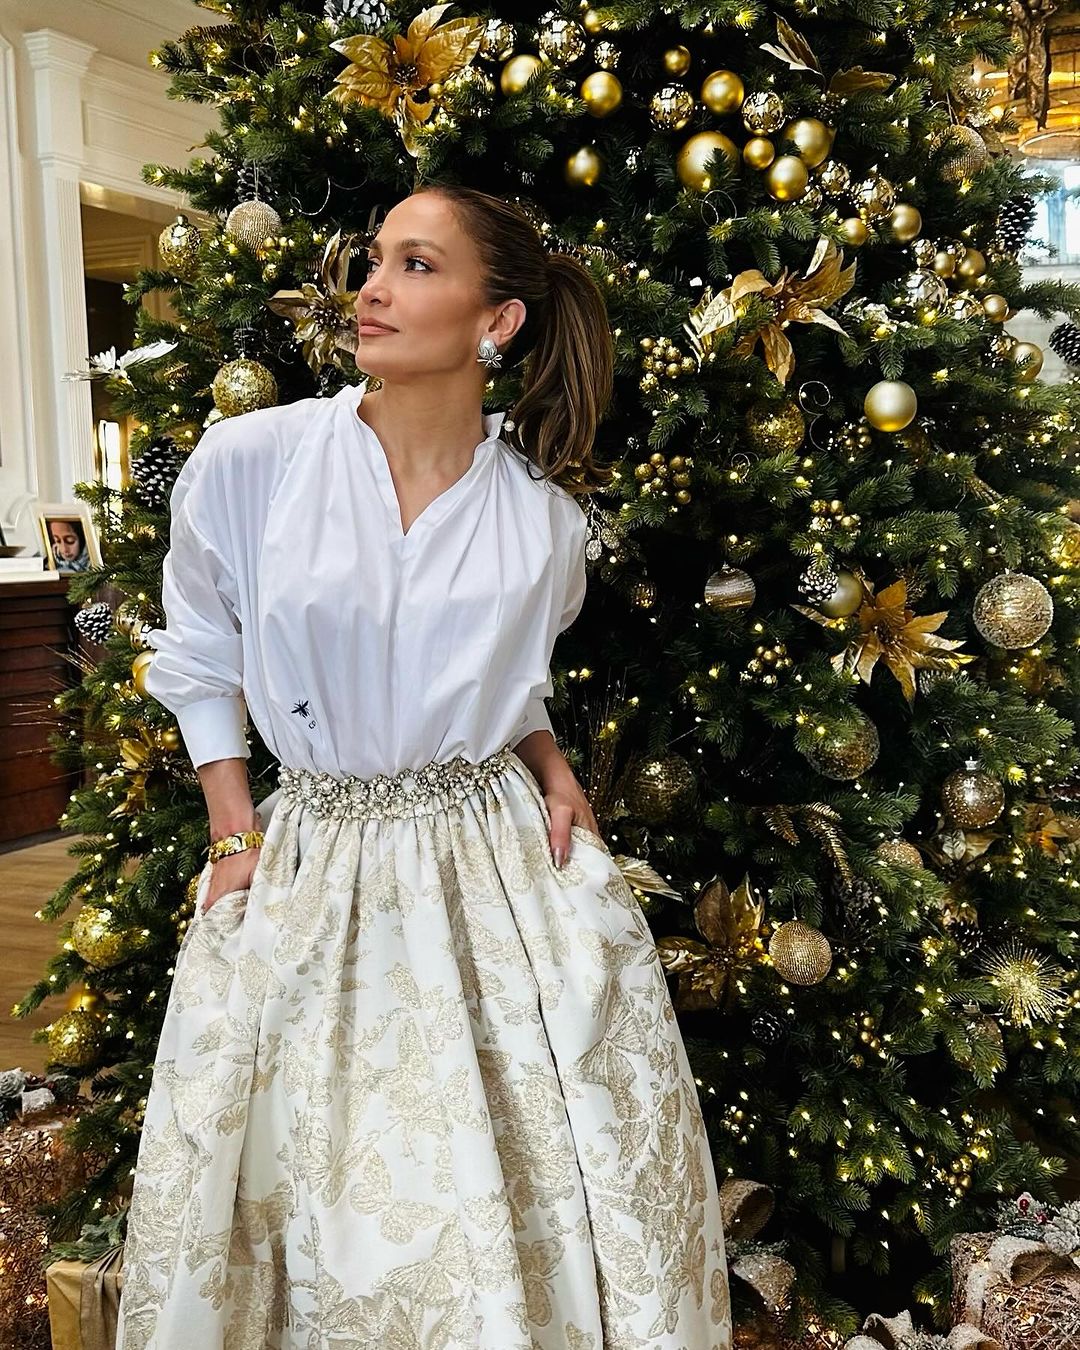 Photos n°3 : Jennifer Lopez Gets Ready for Christmas!